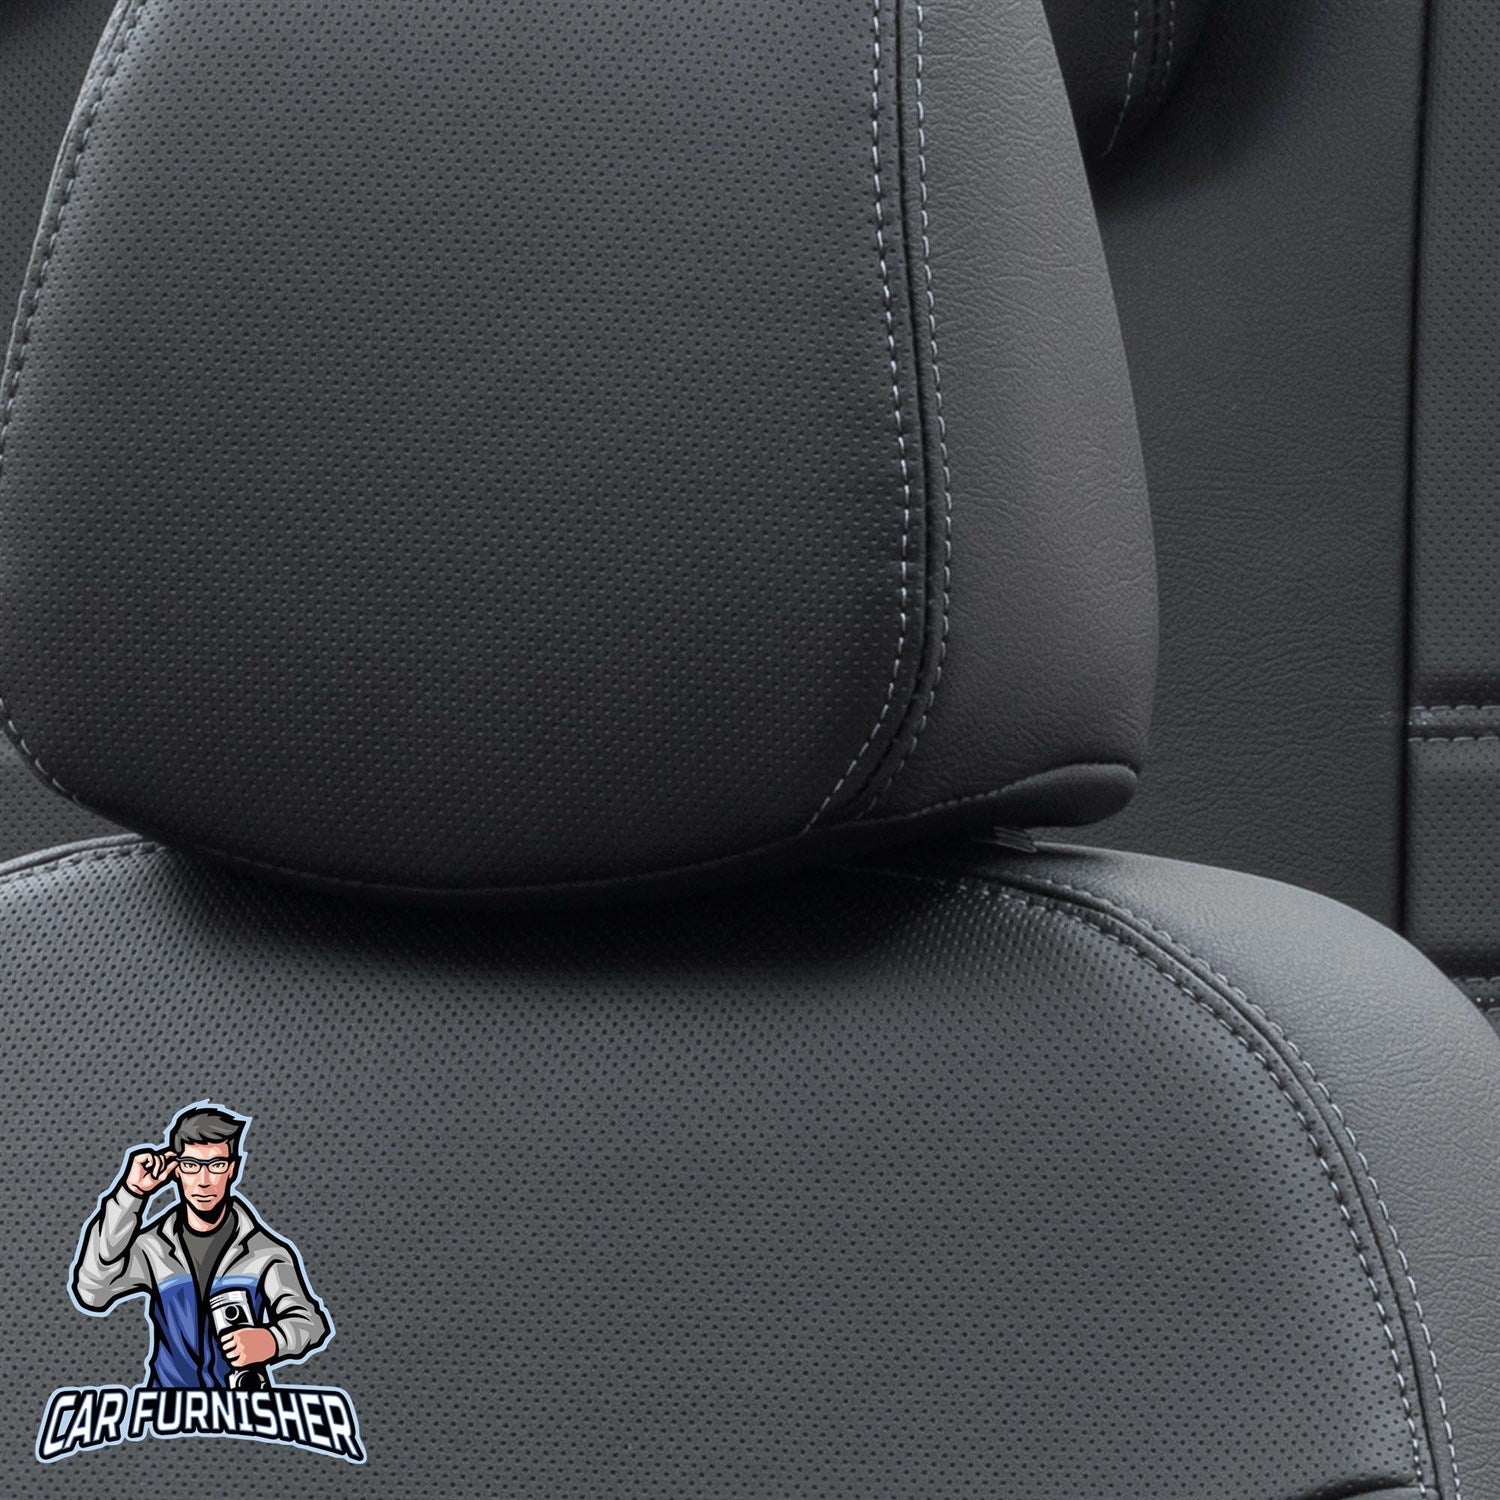 Suzuki Alto Seat Covers Istanbul Leather Design Black Leather